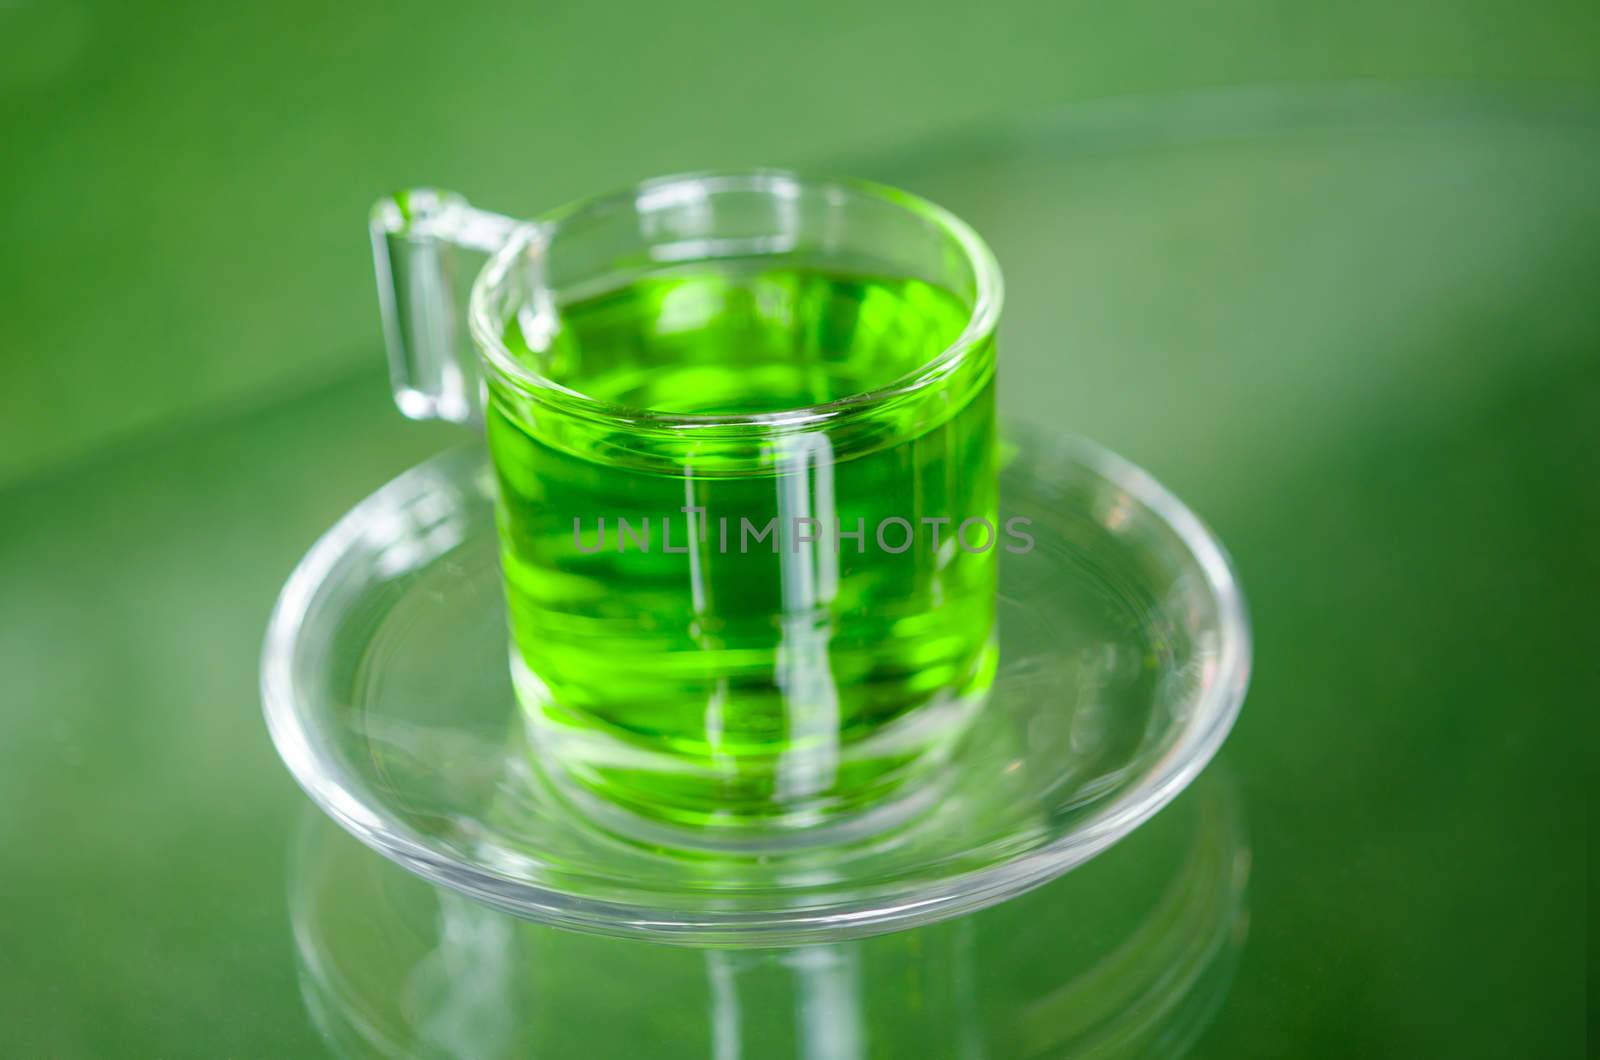 Healthy green tea in glass.